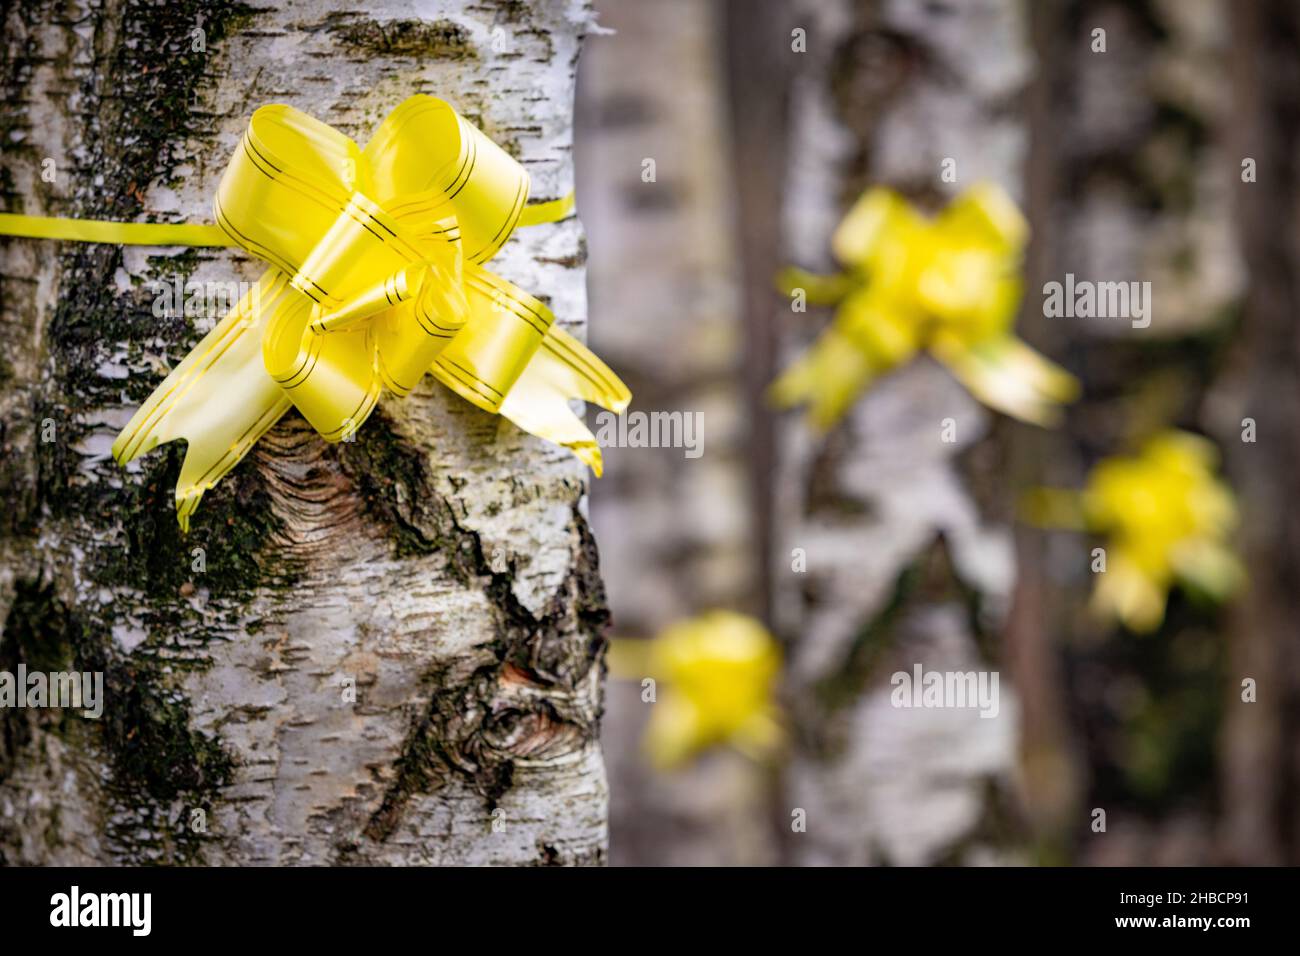 Tie a yellow ribbon round a tree. Stock Photo